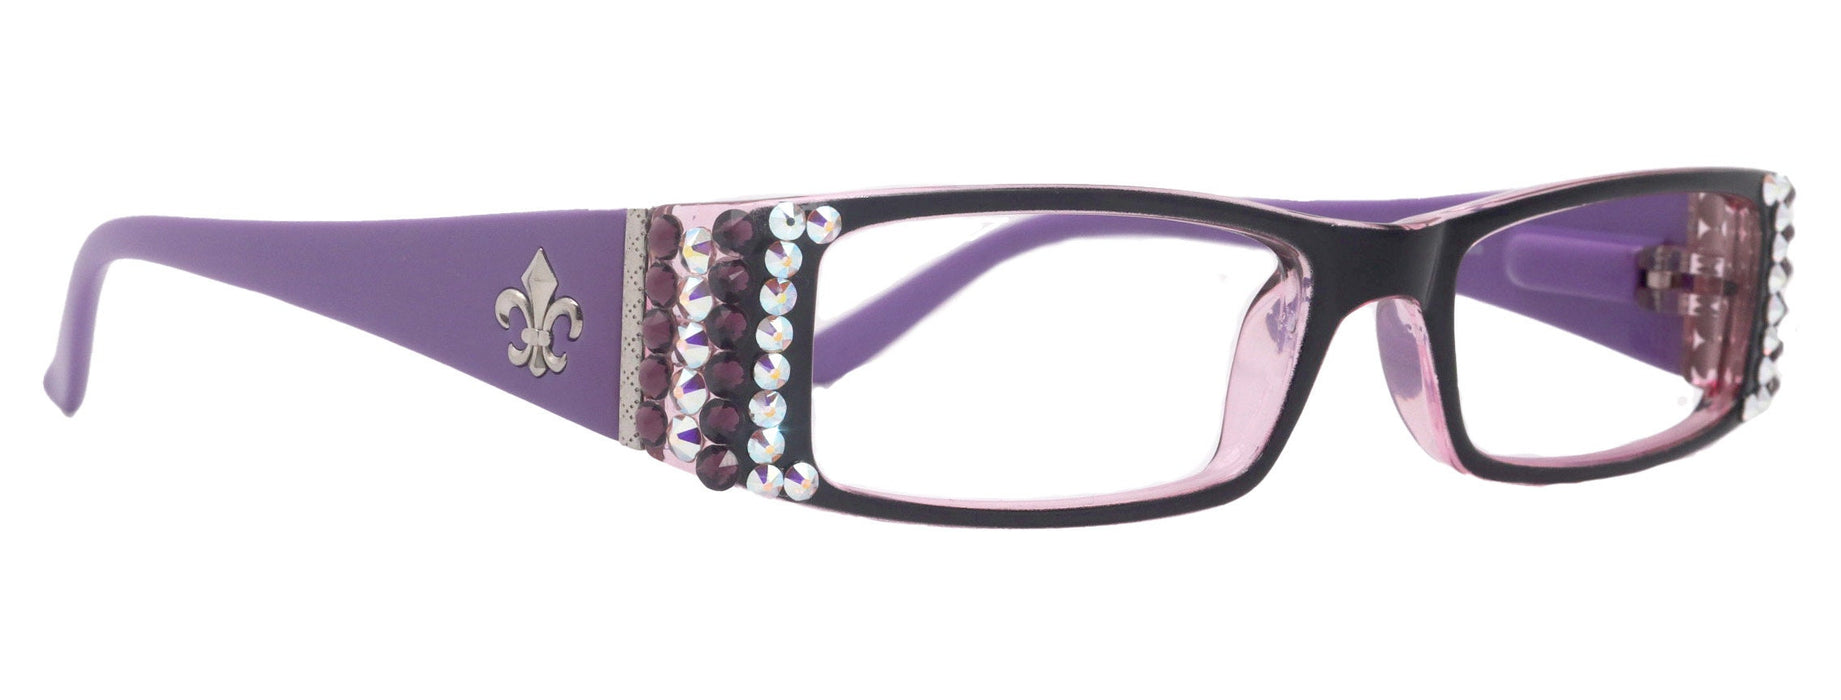 The French, (Bling) (Fleur De Lis) Women Reading Glasses W Genuine European AB n Amethyst Crystals +1 .. +3 (Purple) Frame, NY Fifth Avenue